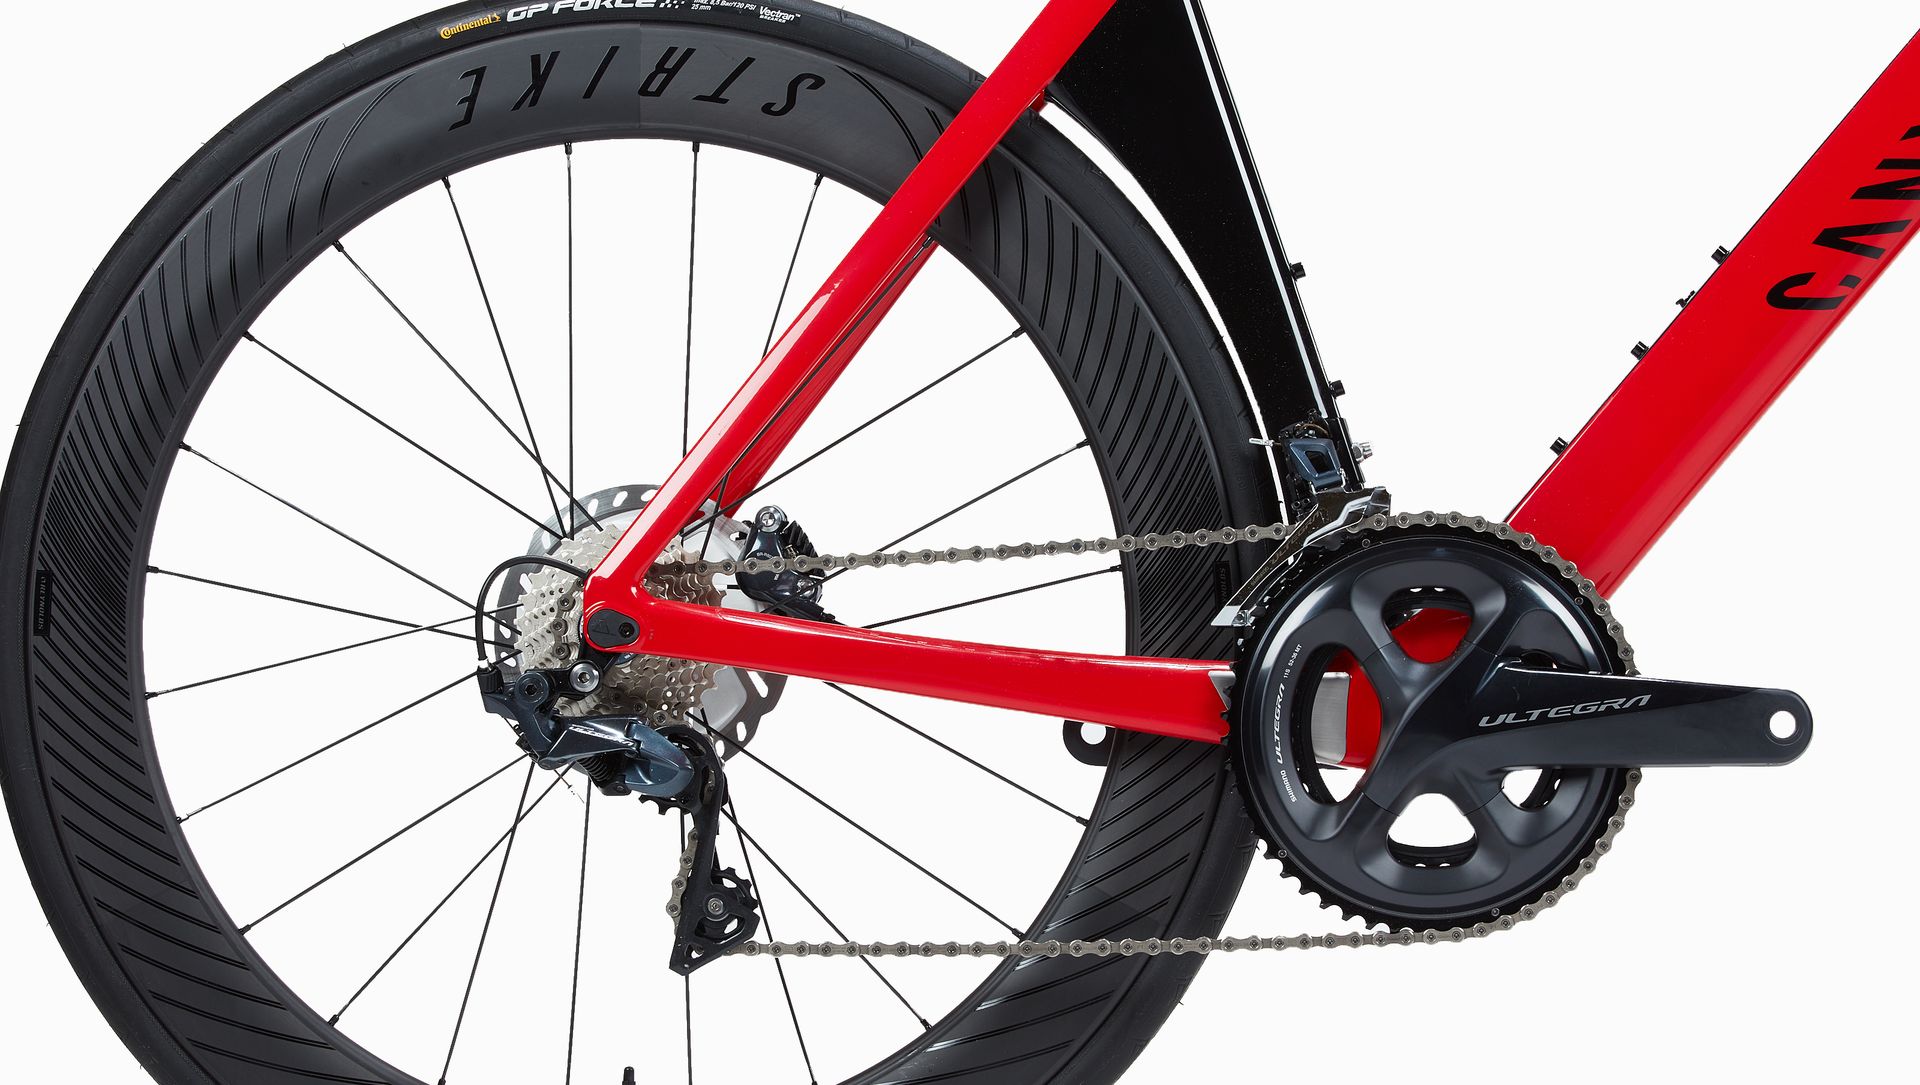 Bicycle wheel, Bicycle part, Bicycle, Vehicle, Bicycle tire, Spoke, Bicycle drivetrain part, Bicycle frame, Groupset, Wheel, 